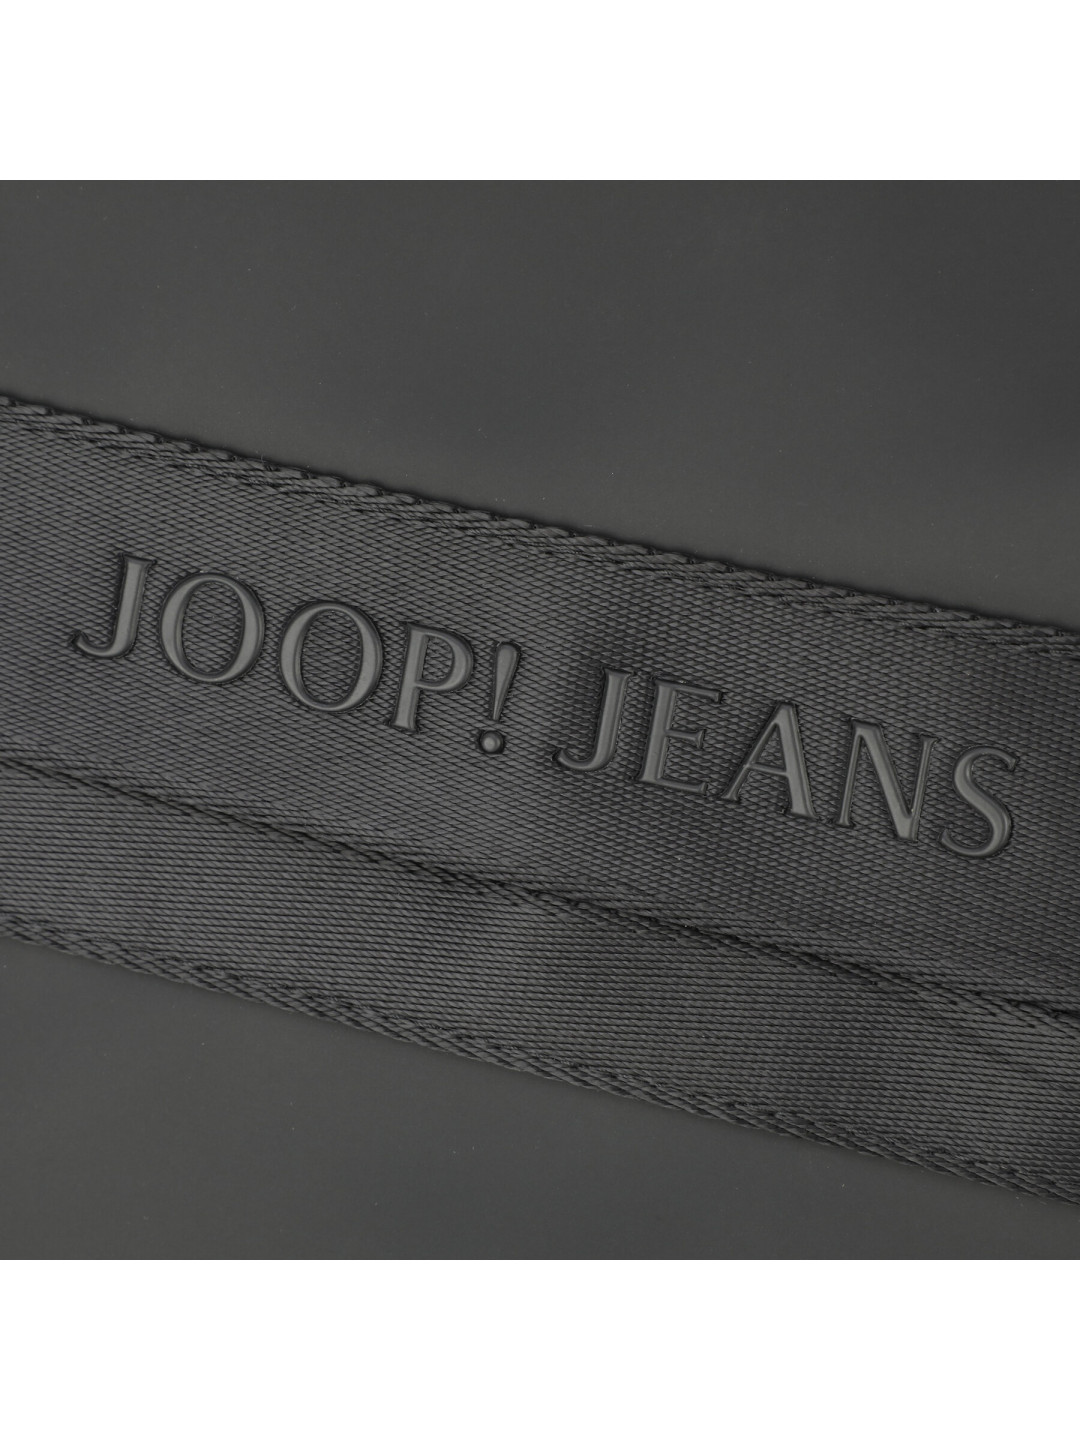 Batoh JOOP Jeans